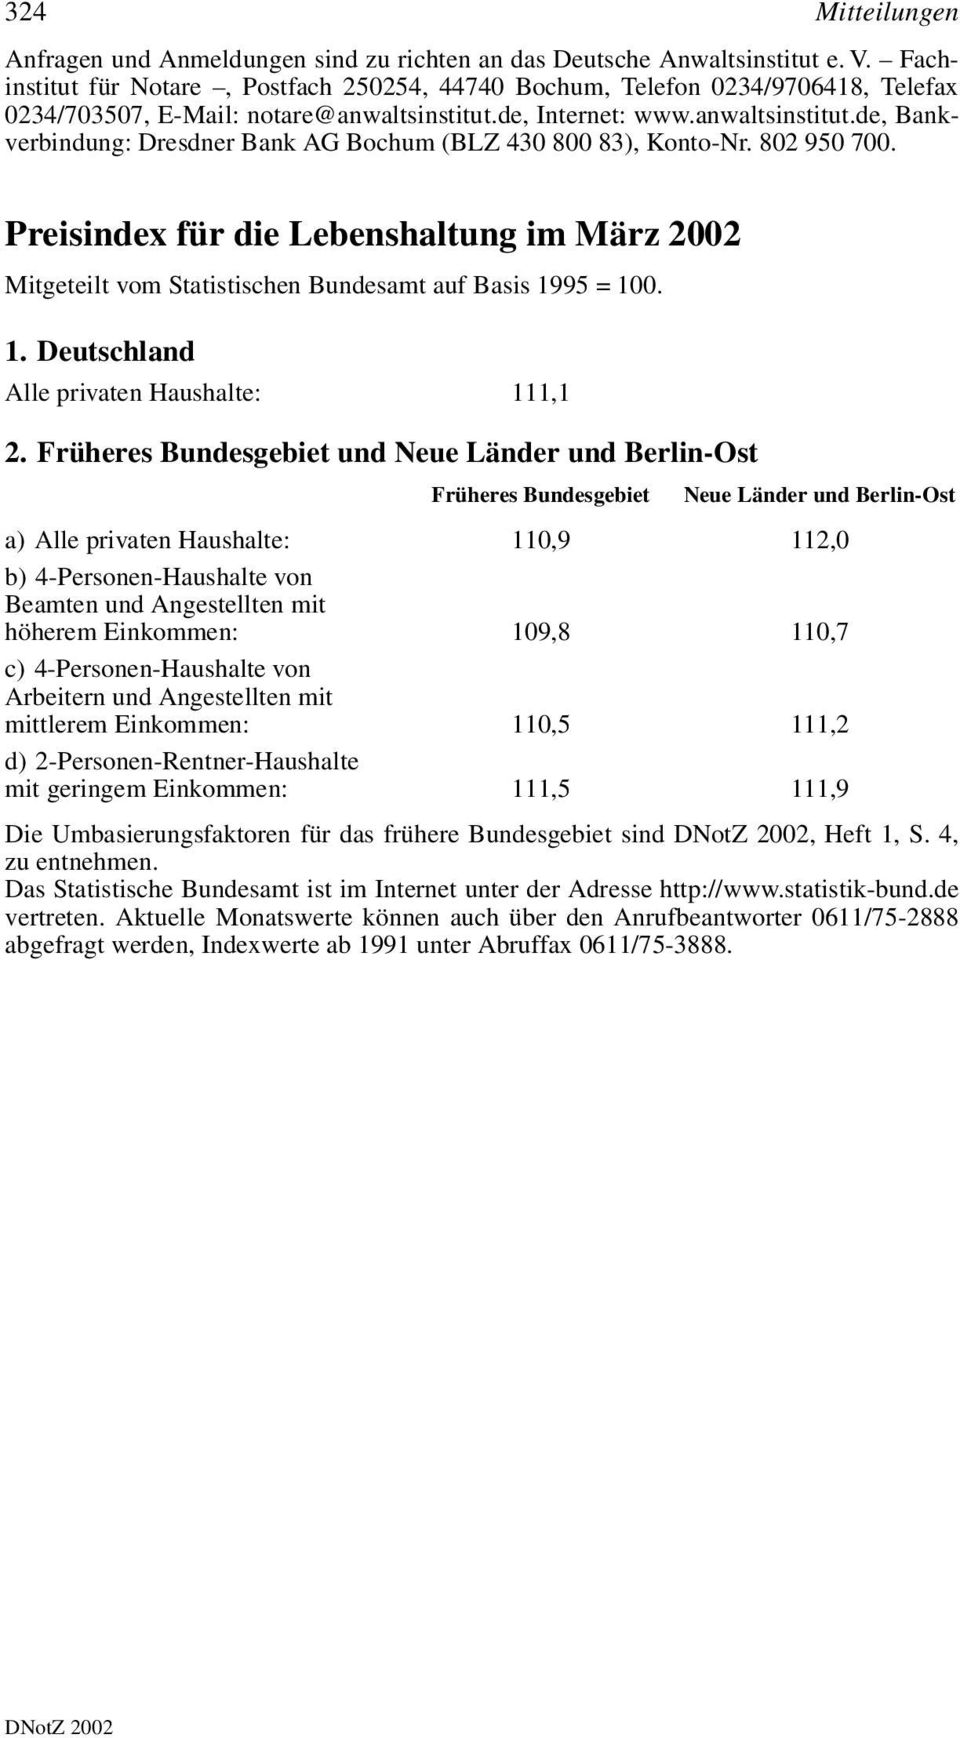 de, Internet: www.anwaltsinstitut.de, Bankverbindung: Dresdner Bank AG Bochum (BLZ 430 800 83), Konto-Nr. 802 950 700.